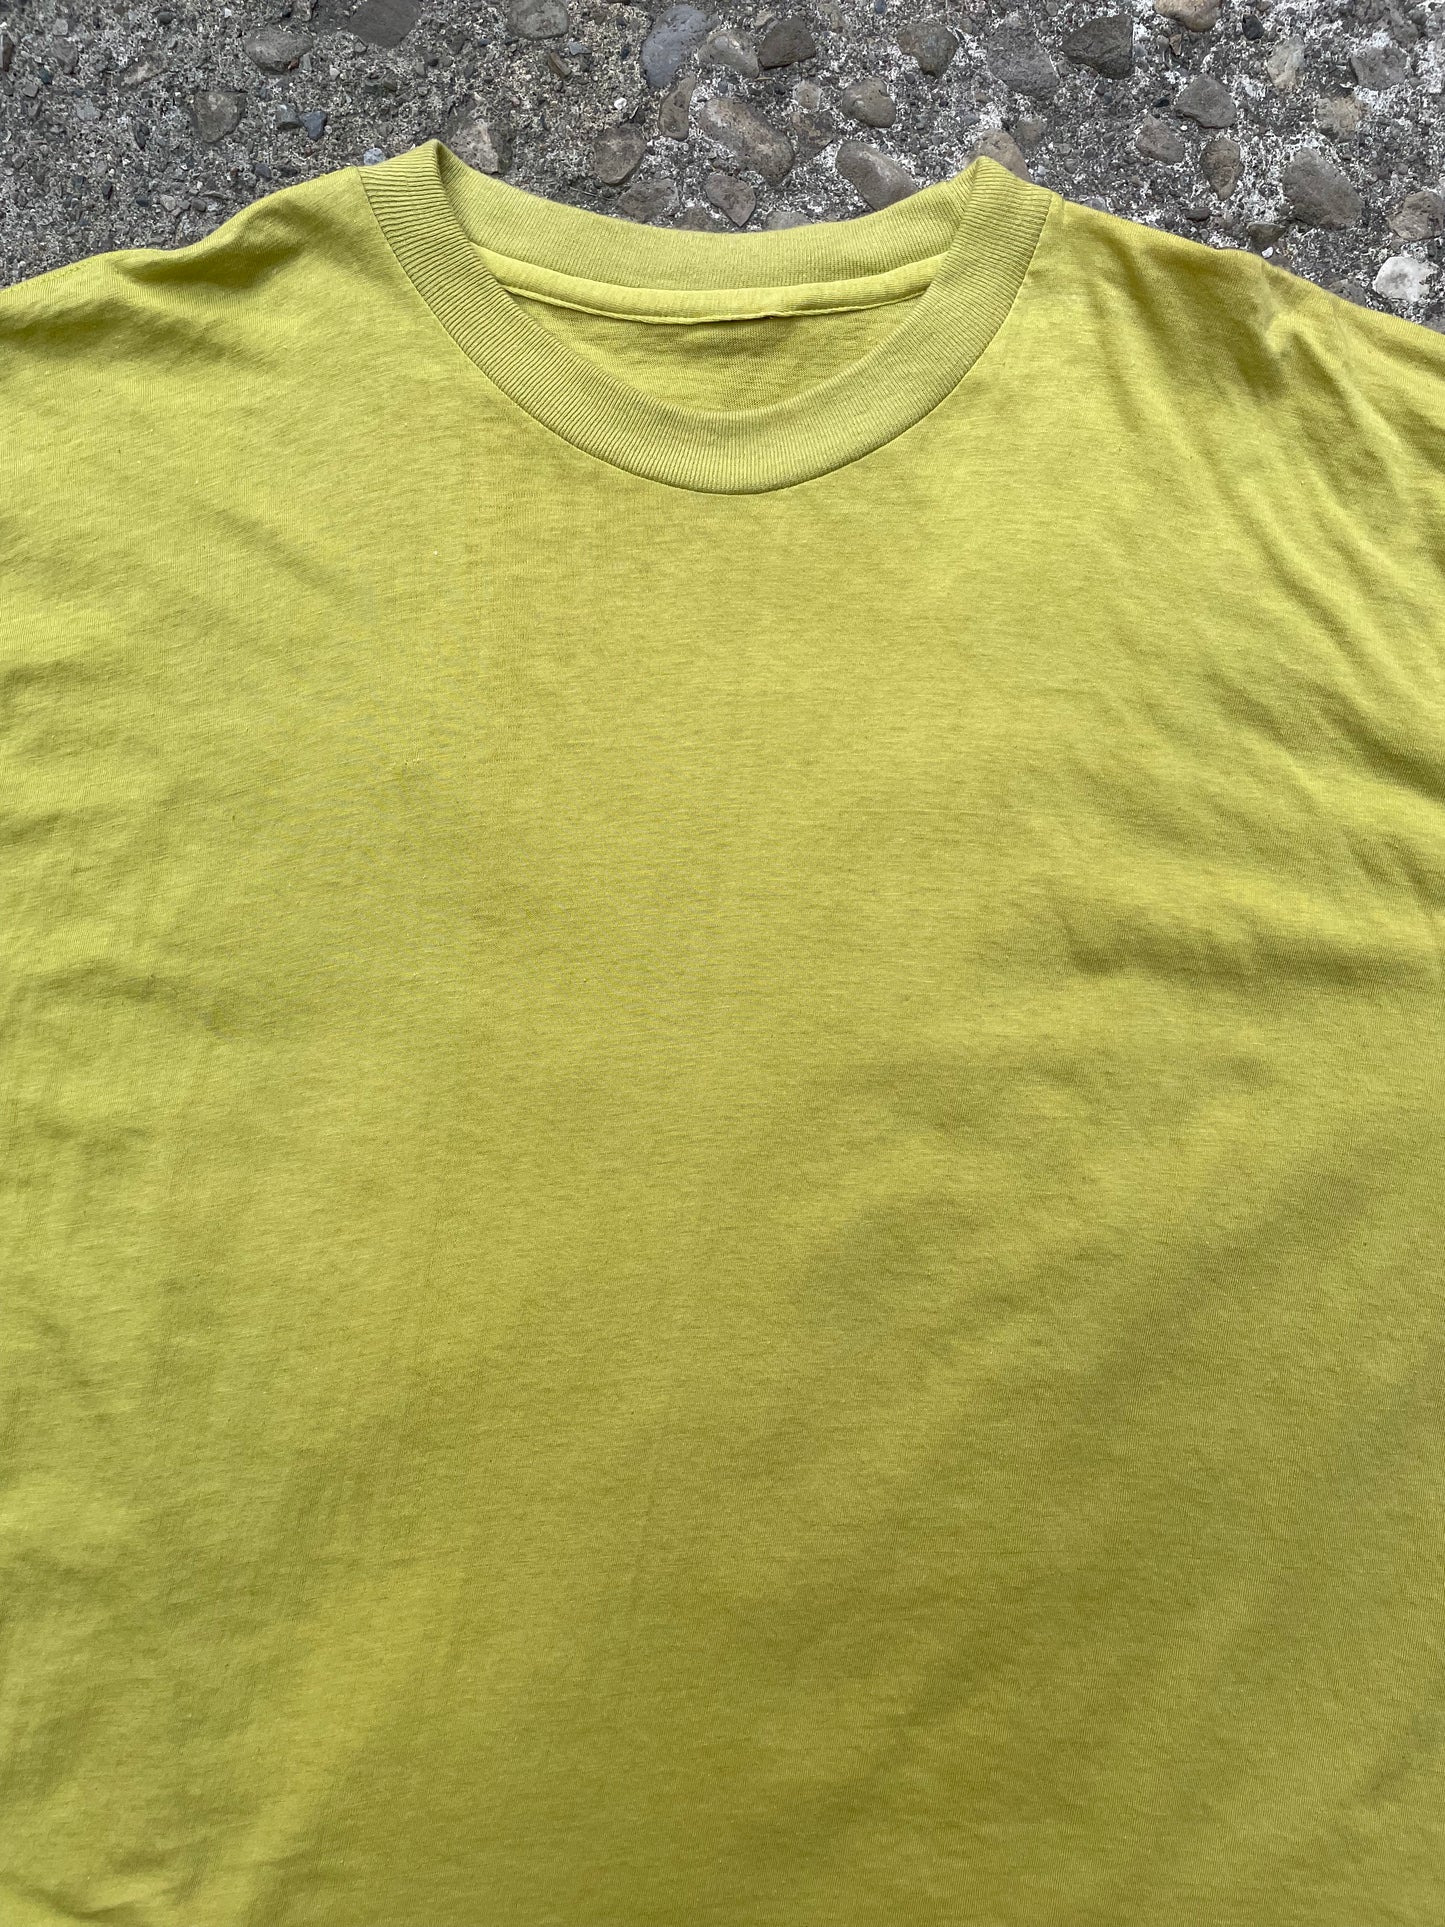 1990's Pale Green Blank T-Shirt - XL